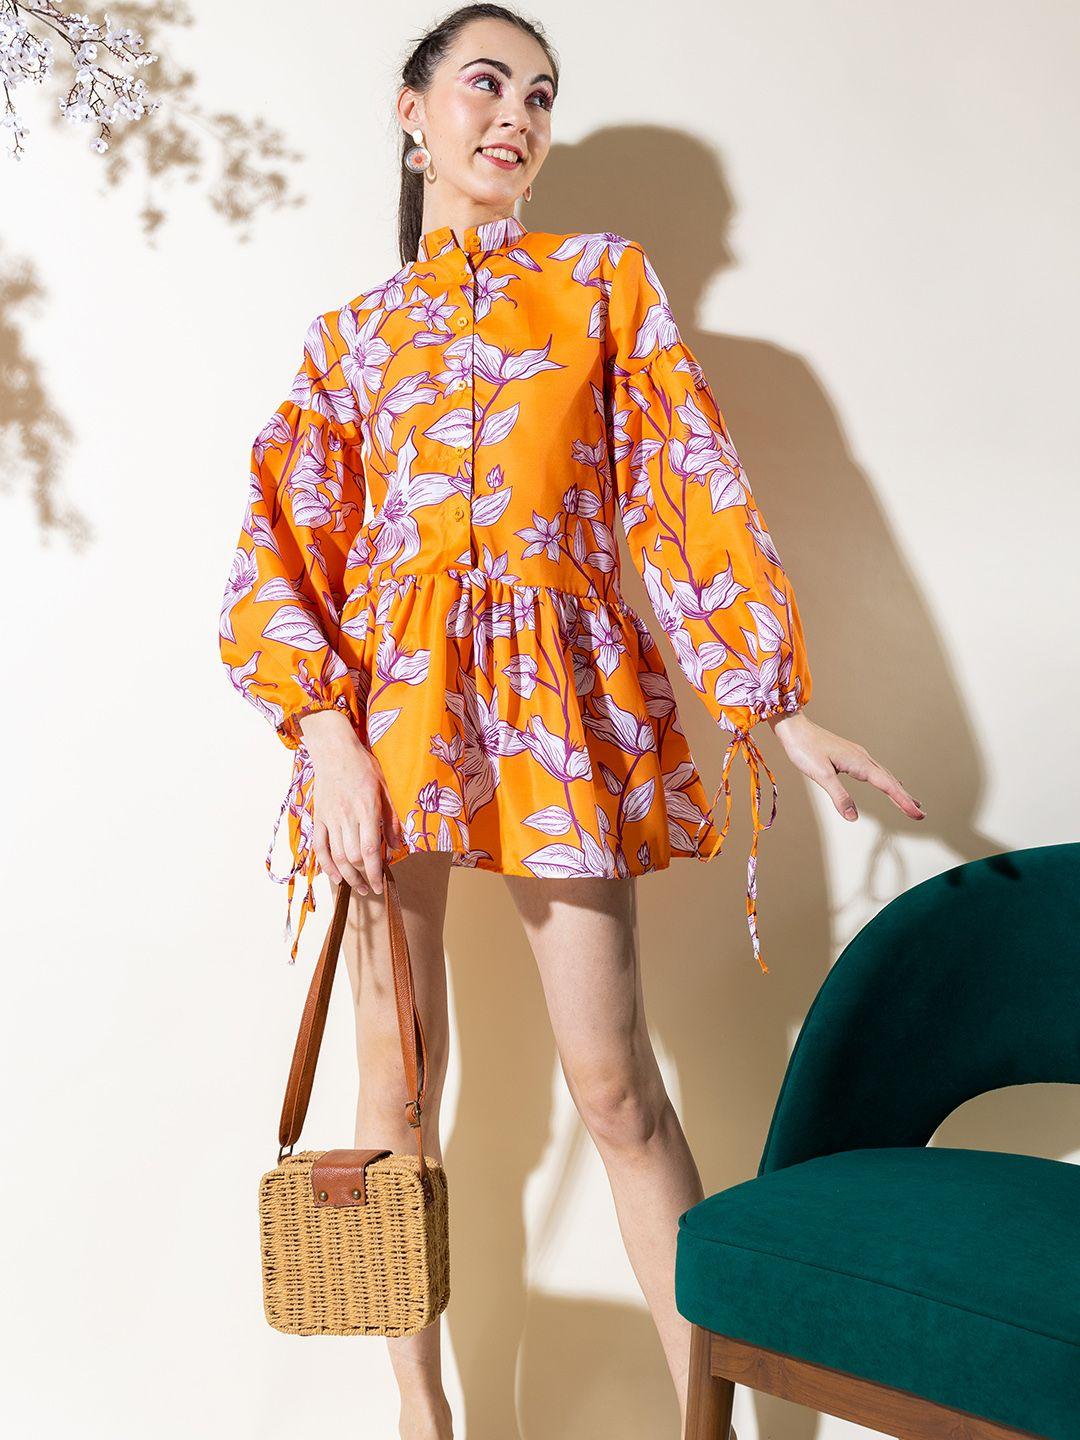 stylecast x hersheinbox floral print puff sleeves cotton shirt style mini dress